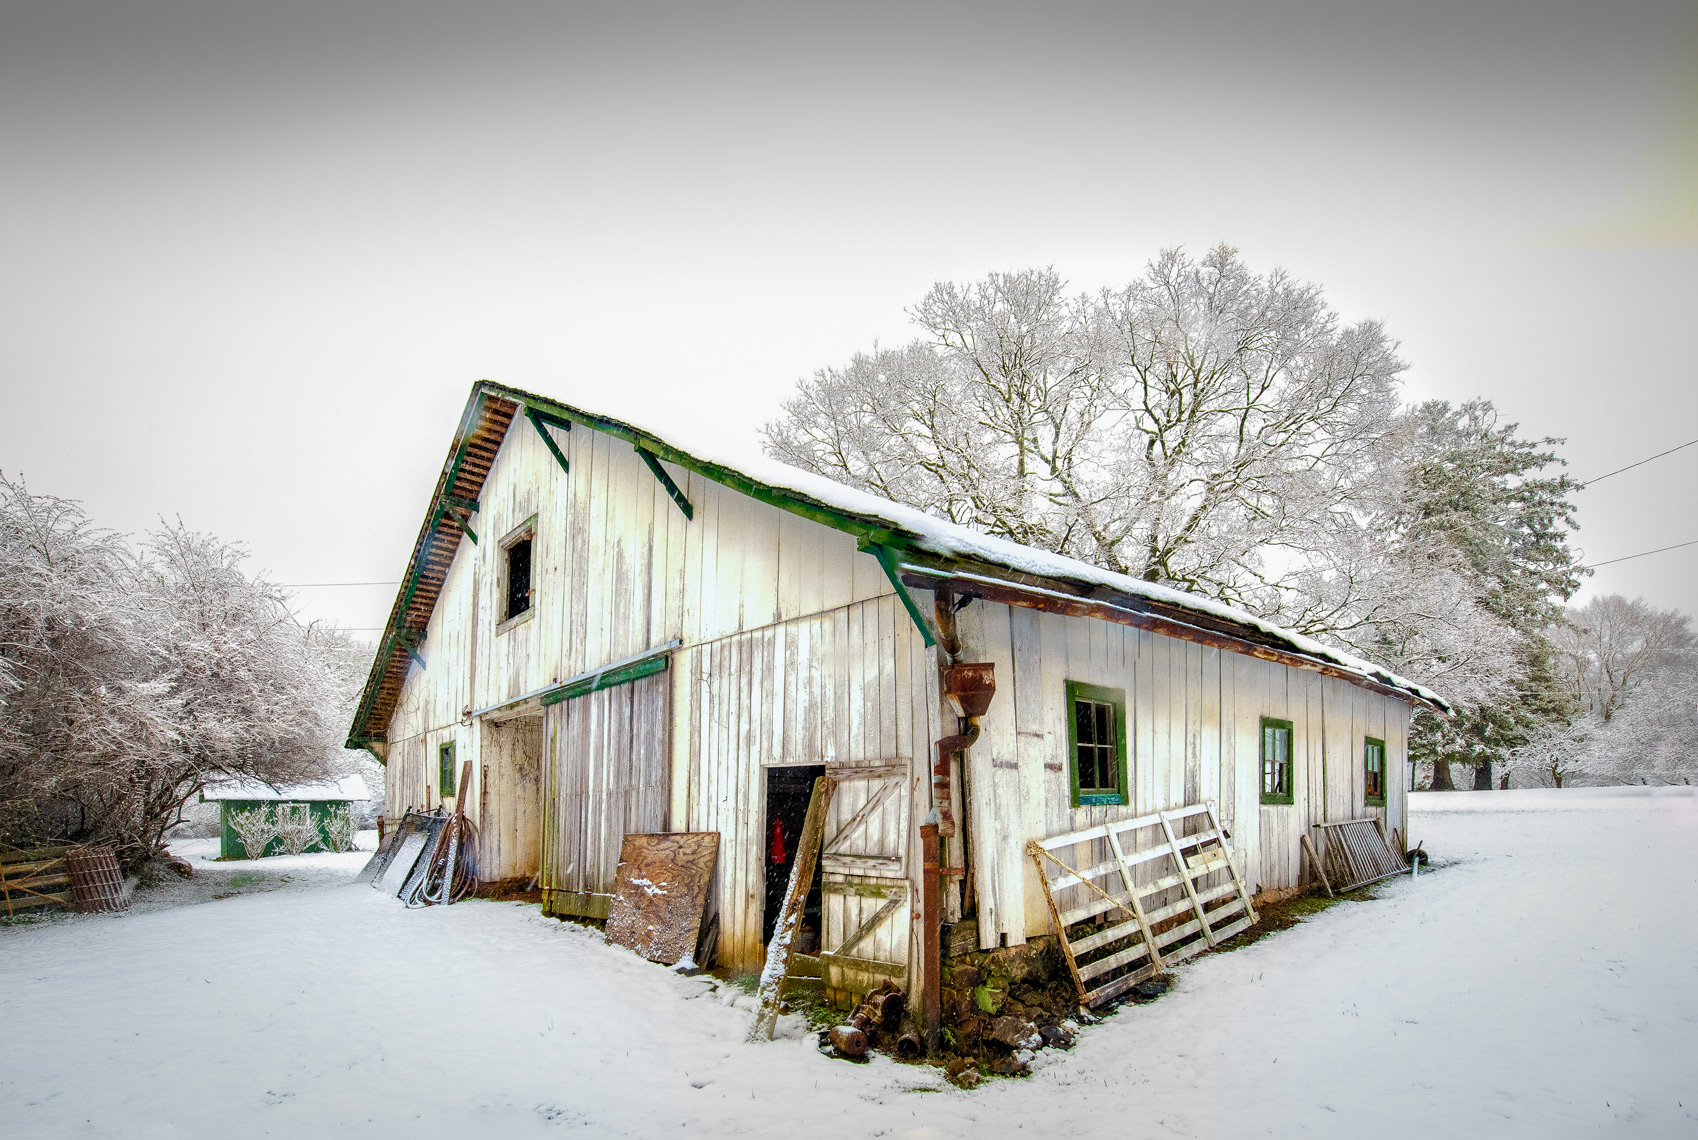 Barn in Snow | Chattanooga, TN Wall Art Prints | Dan Reynolds Photography